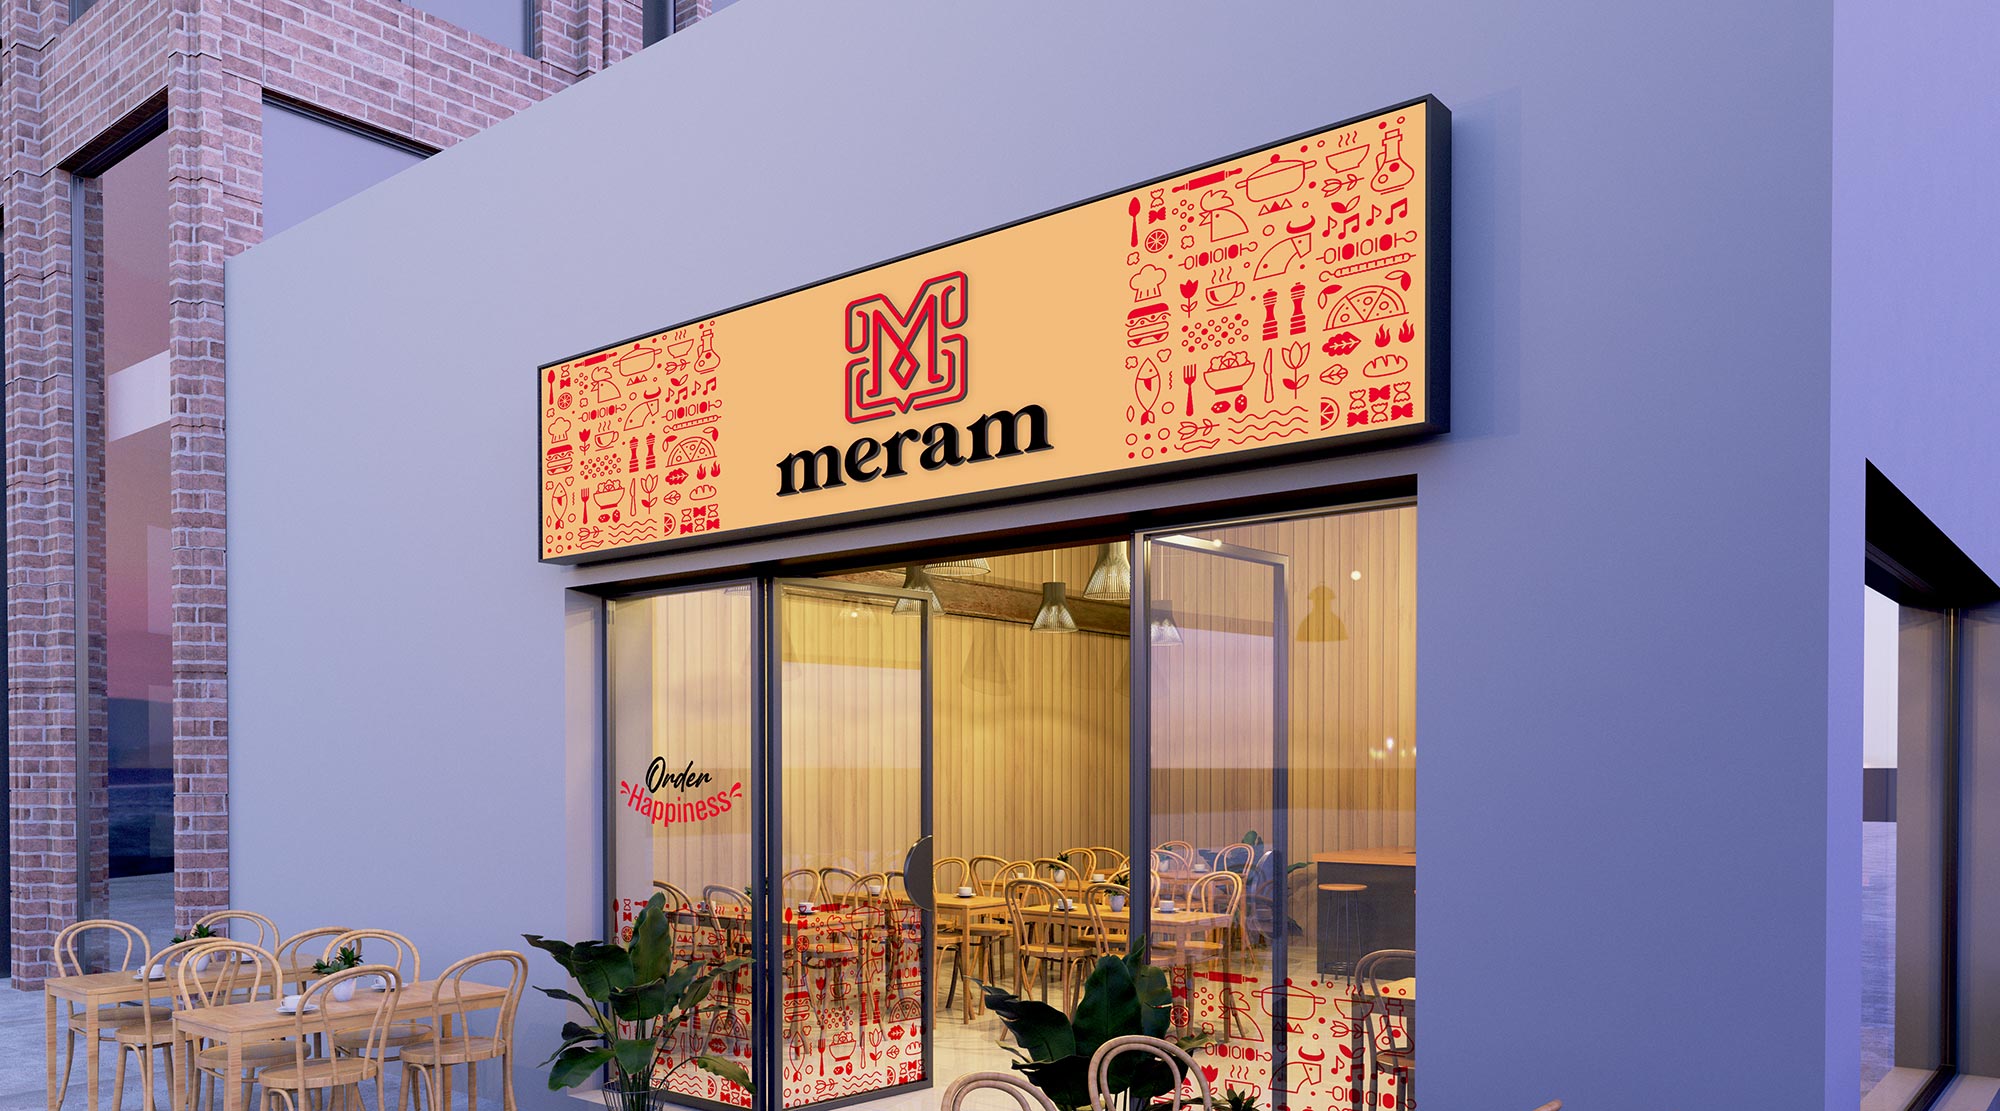 Meram Restaurant Branding - KONSEPTIZ Advertising Agency in Turkey